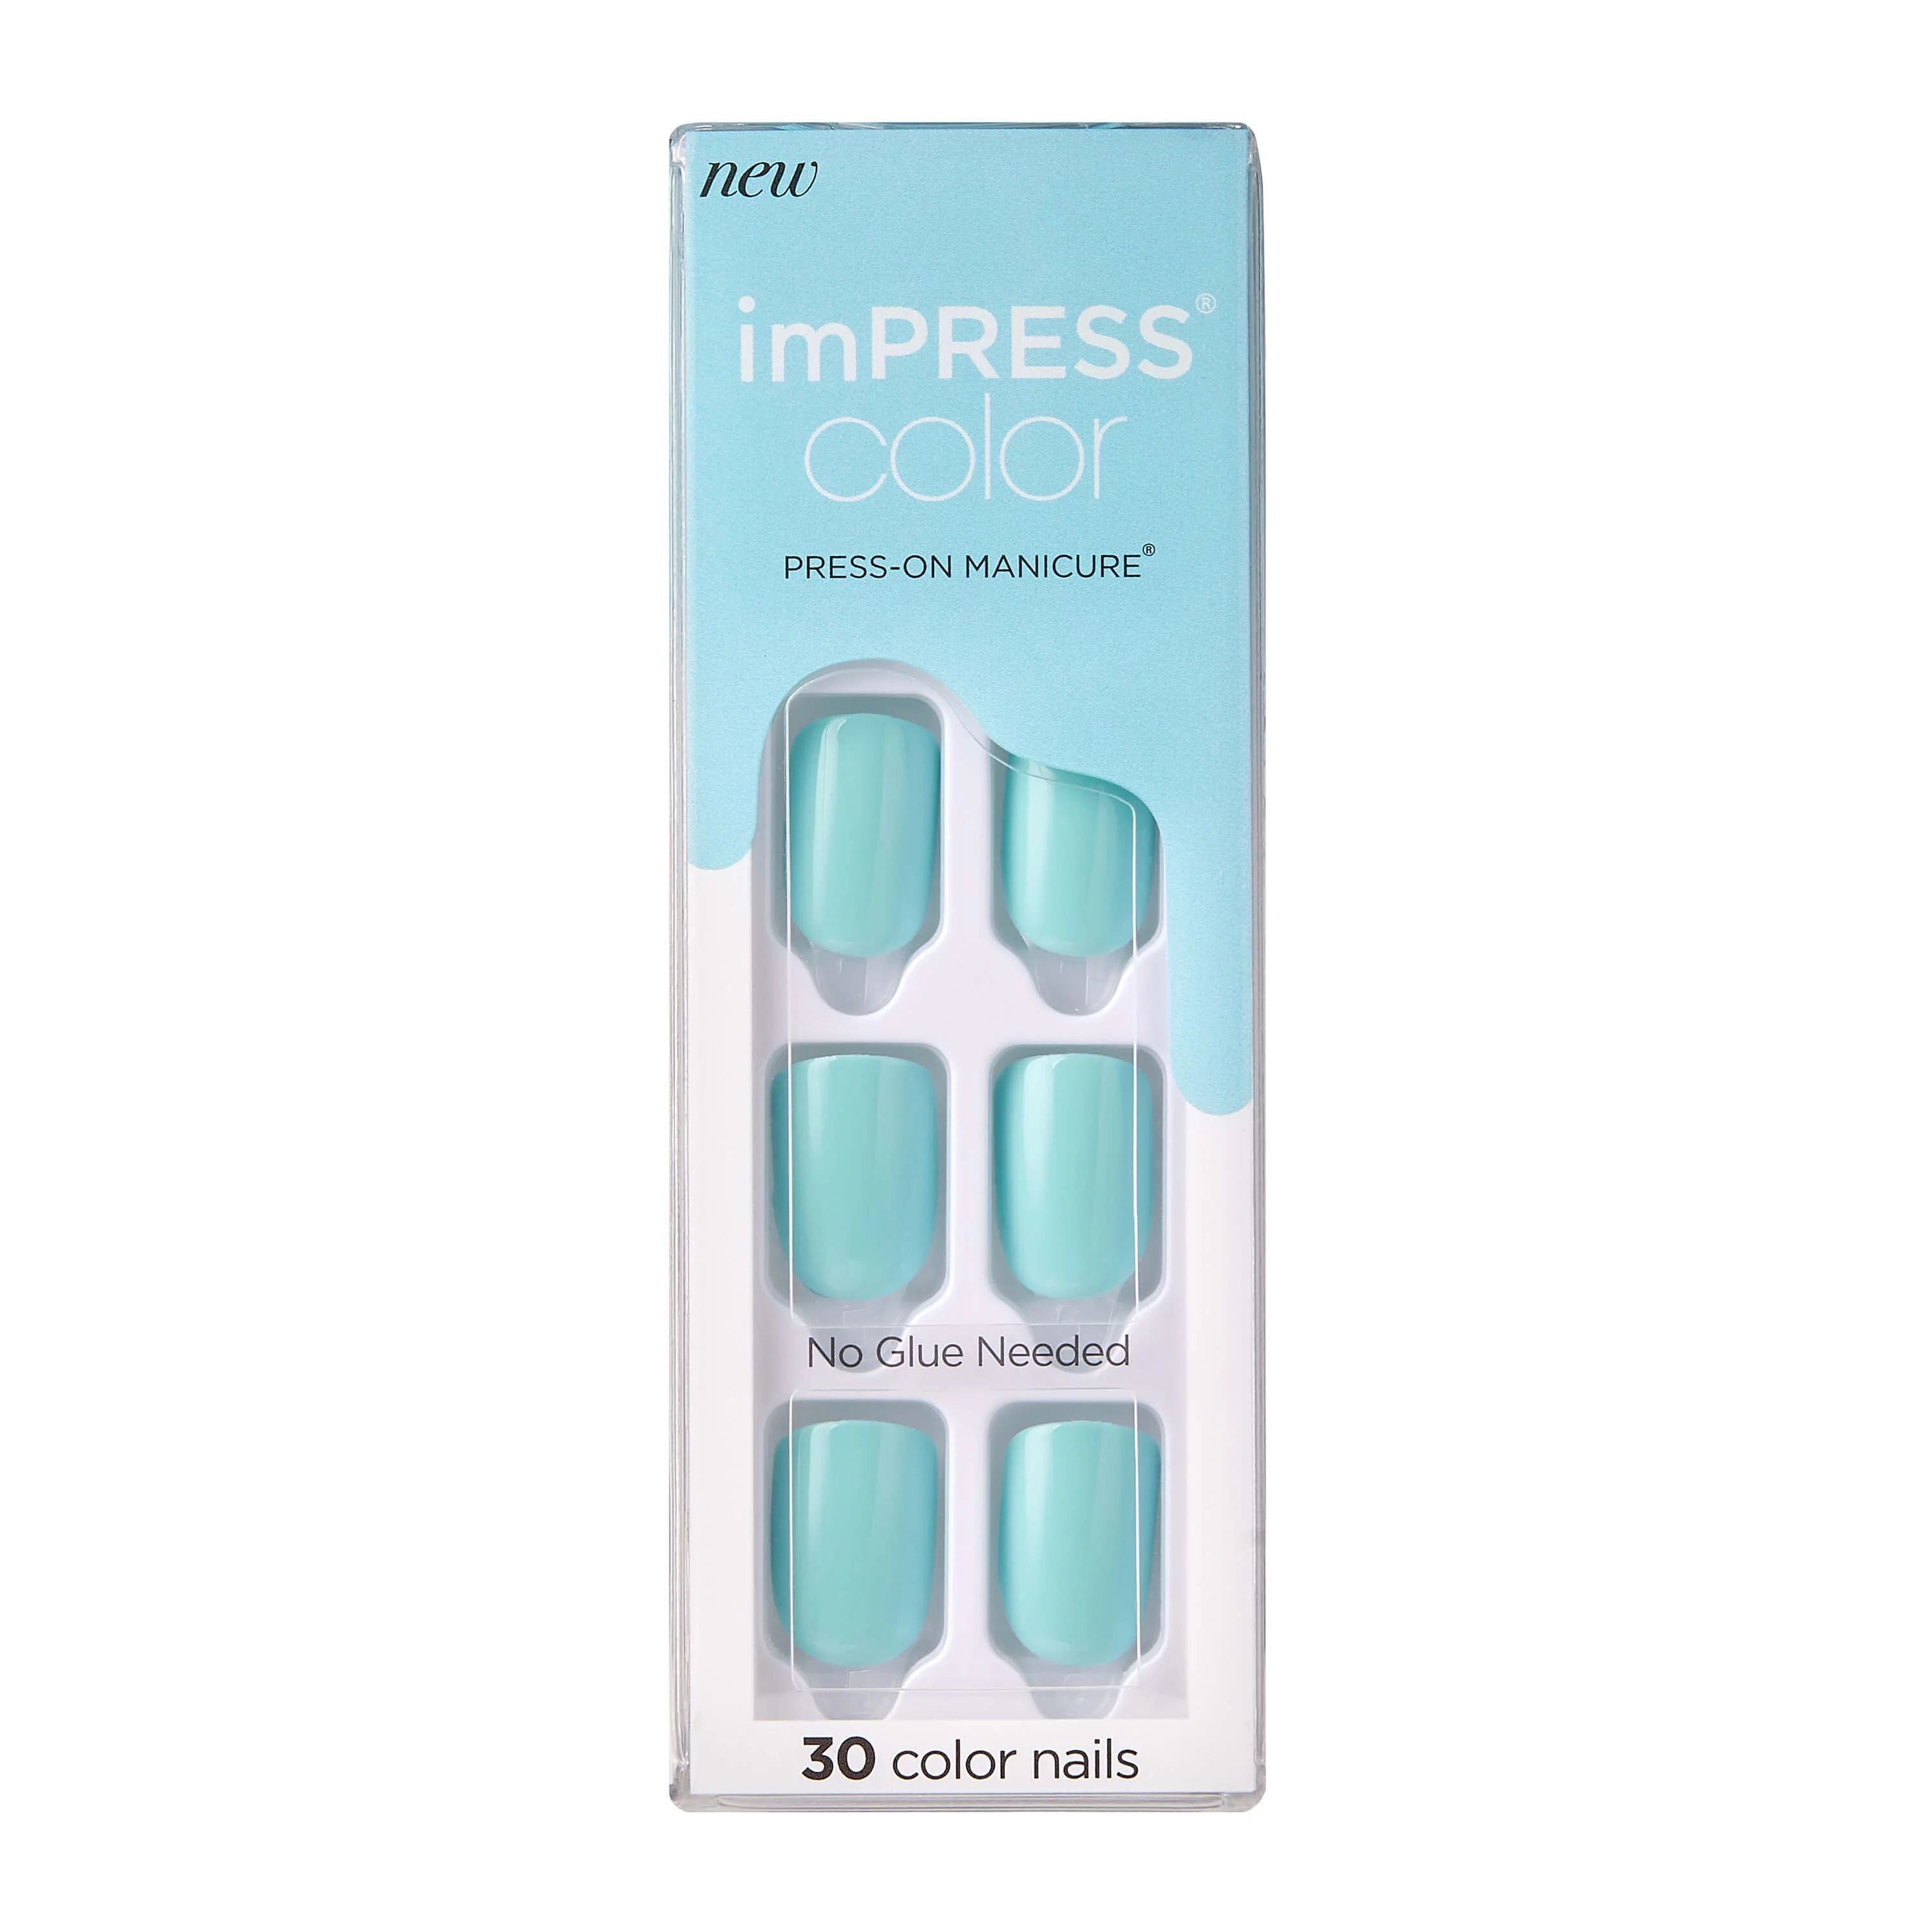 KISS imPRESS Color Press-on Manicure, Mint To Be, Short | Walmart (US)